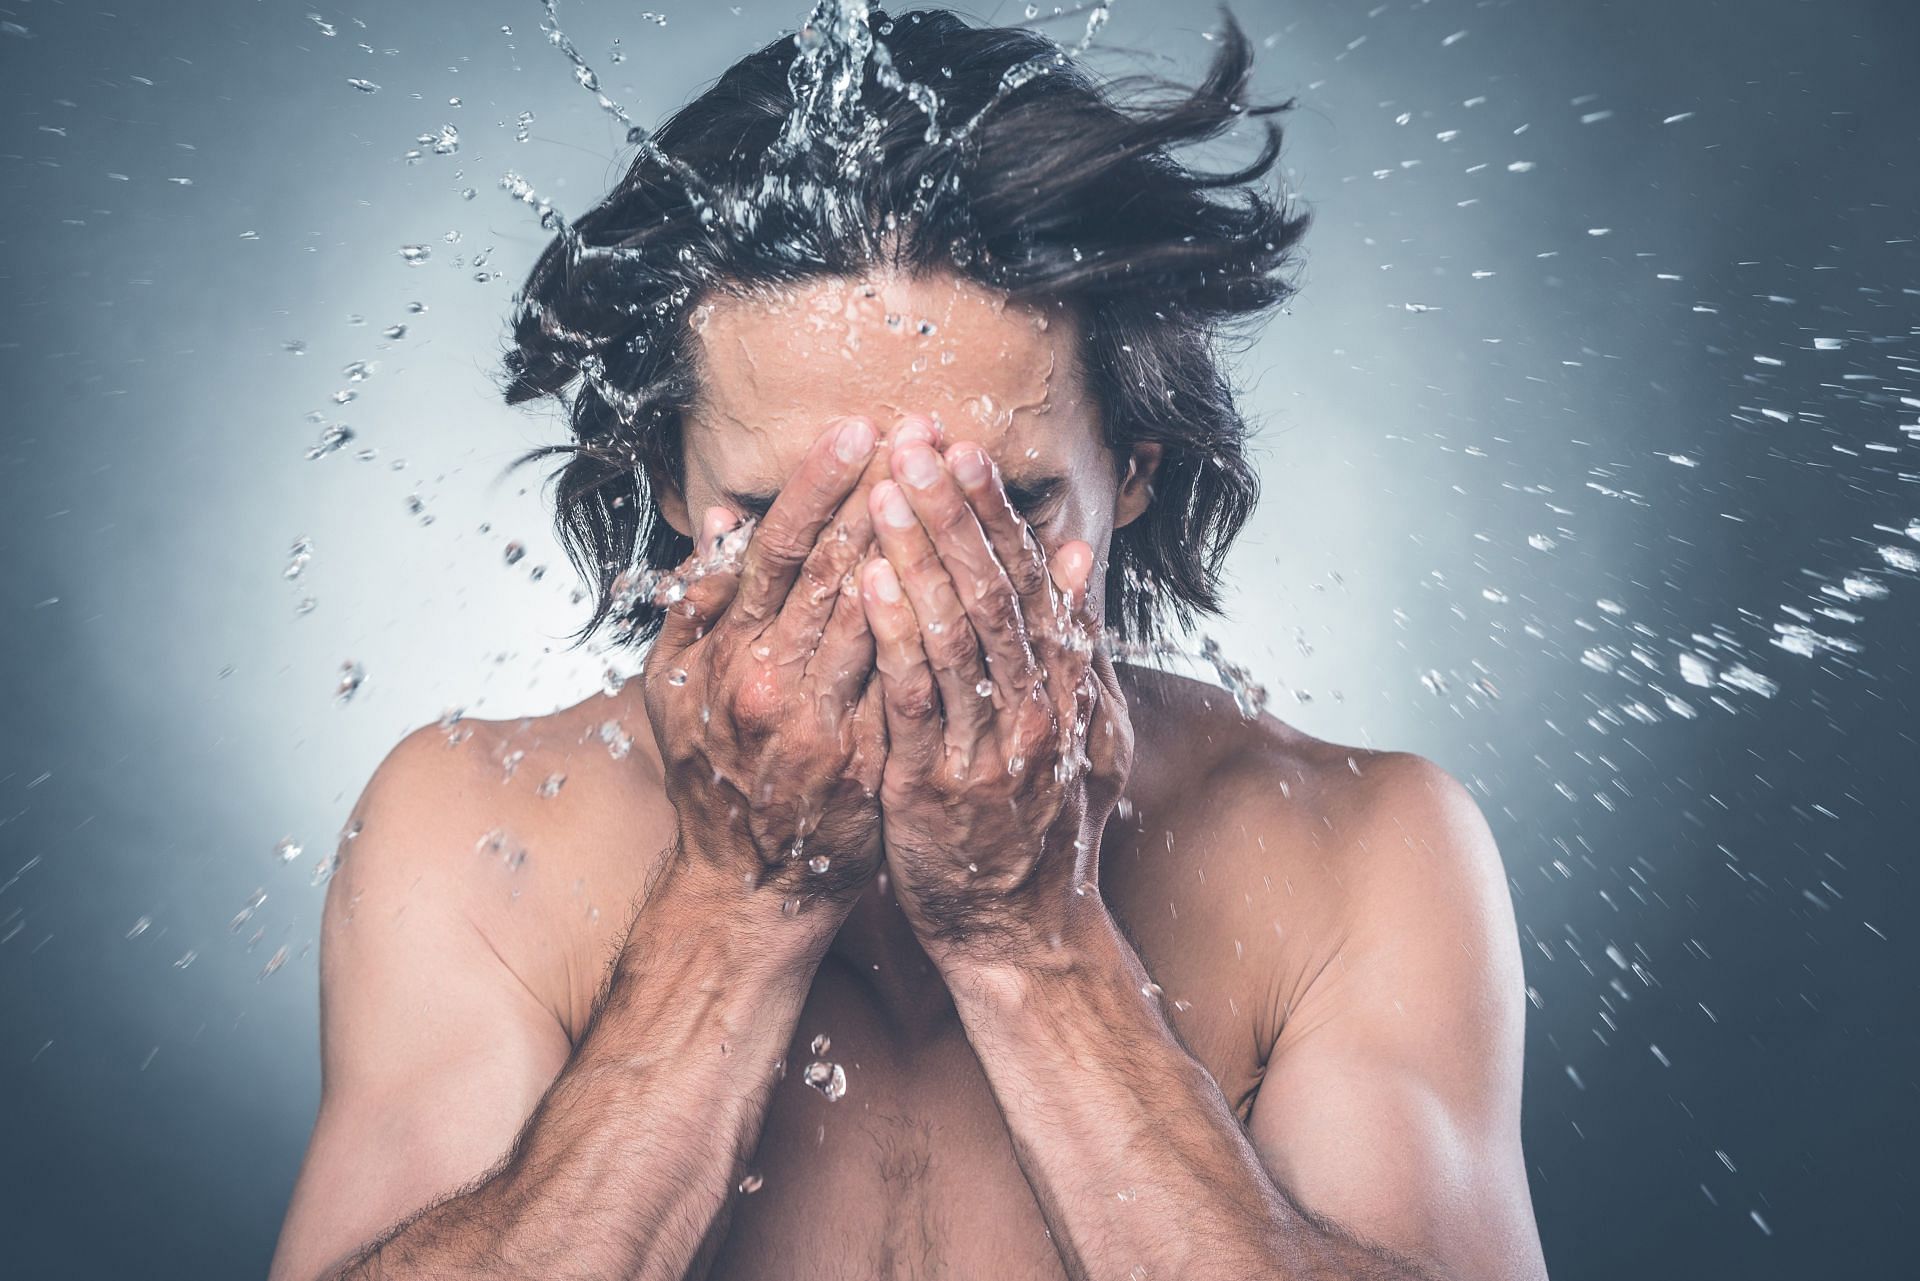 Do depression showers really exist? (Image via Vecteezy/ Gstockstudio)